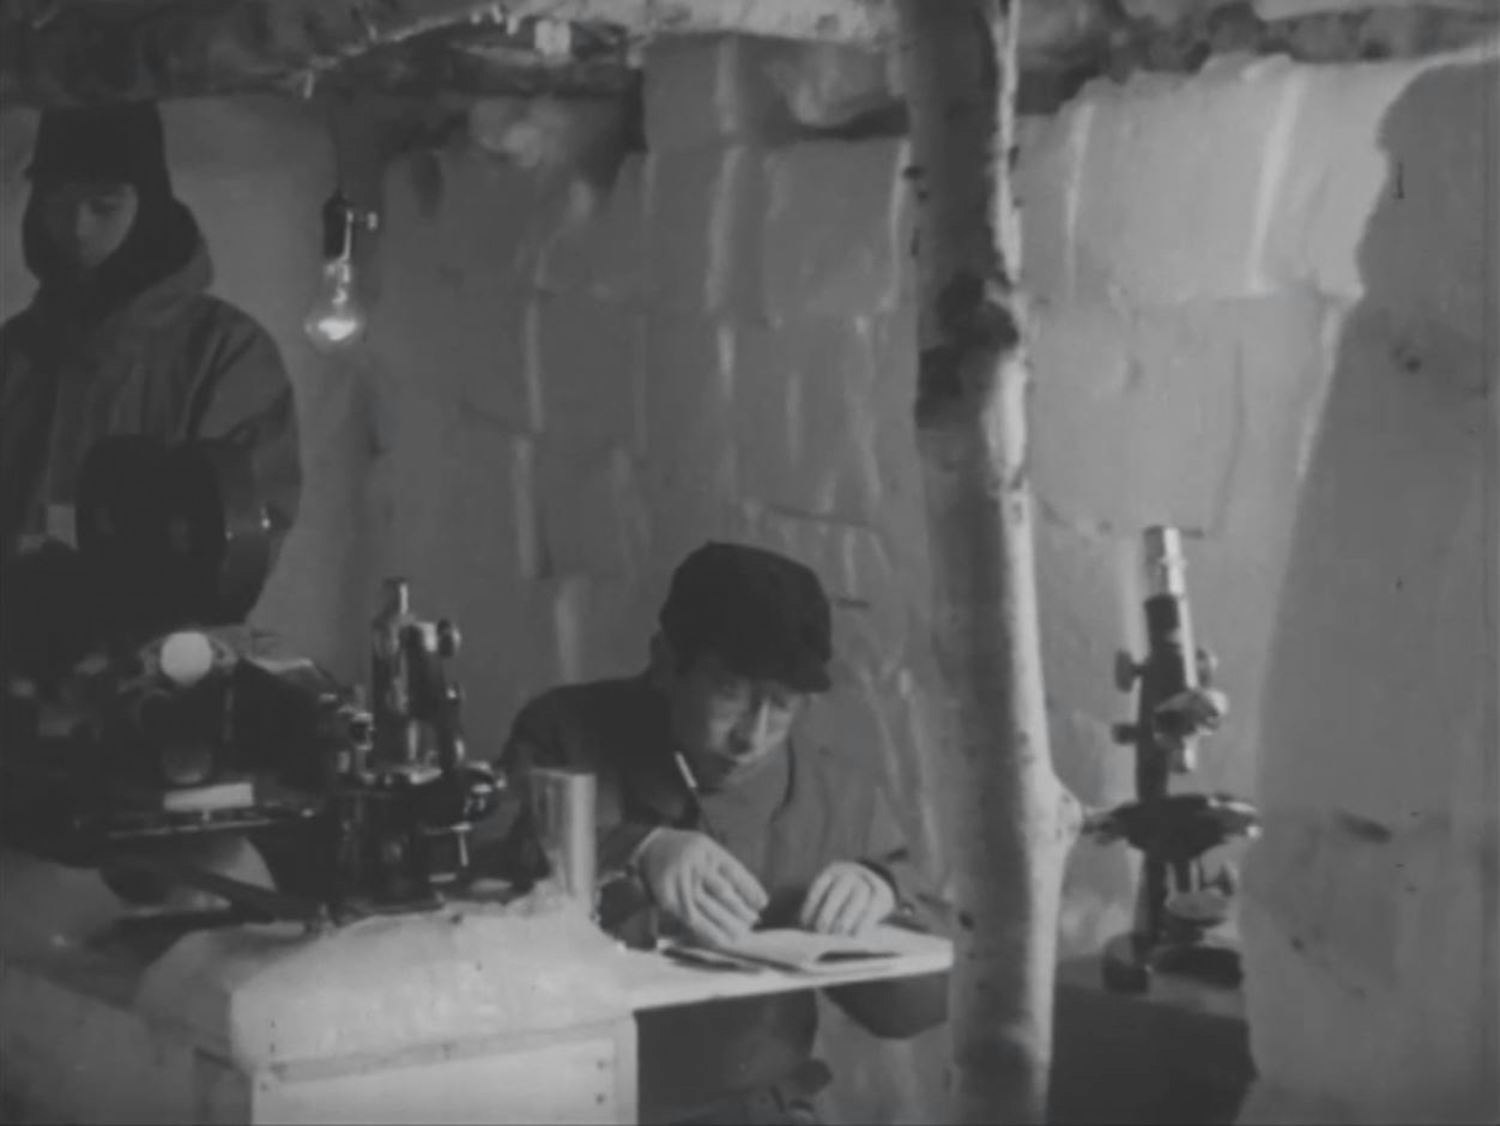 Standbild aus Snow Crystals (1958) 14min, Iwanami, Tanoshii Kagaku series. Produced by Shigeharu Yoshino, directed by Chonosuke Ise